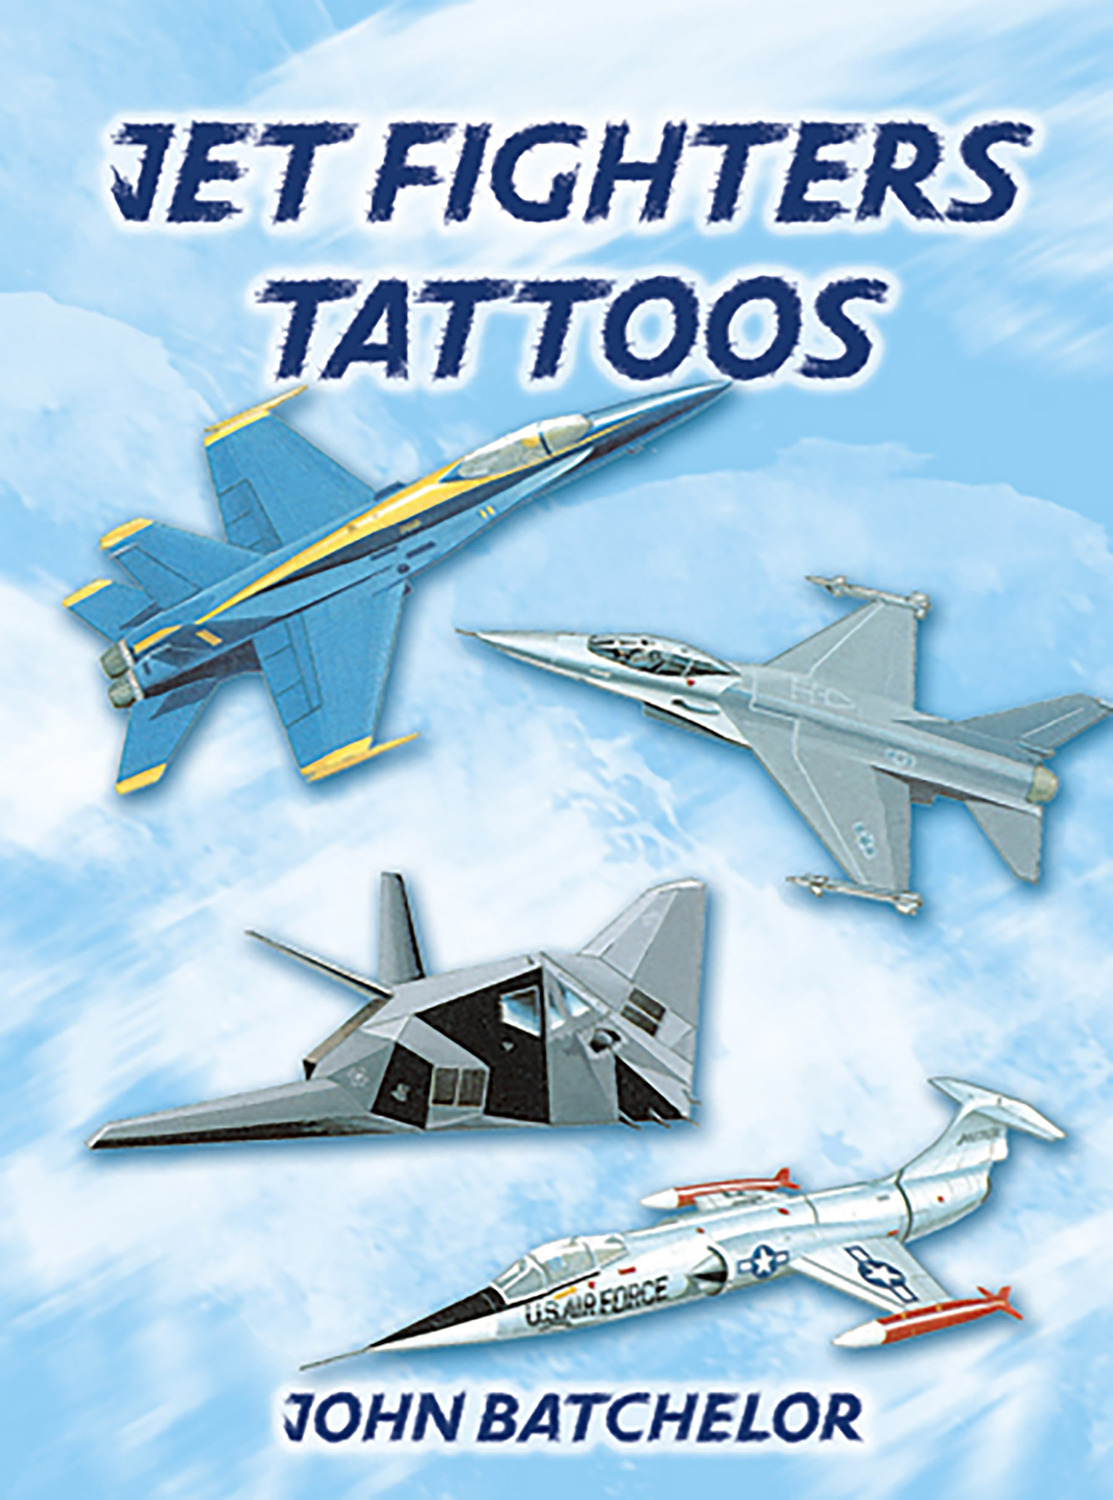 Dream Aero US - Who has an aviation tattoo? | Facebook